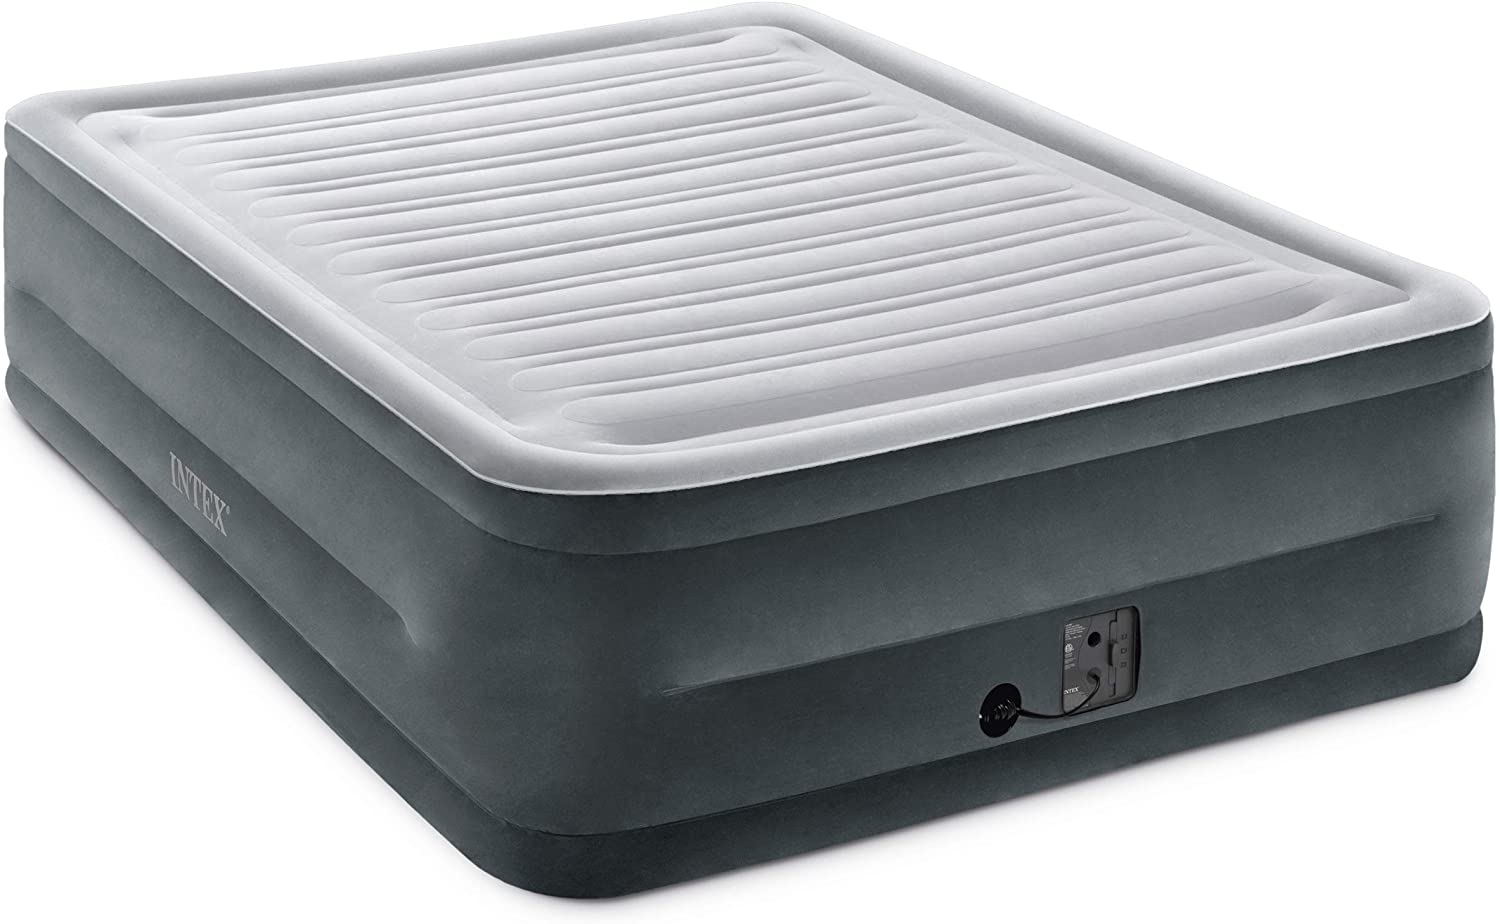 weight capacity for air mattress